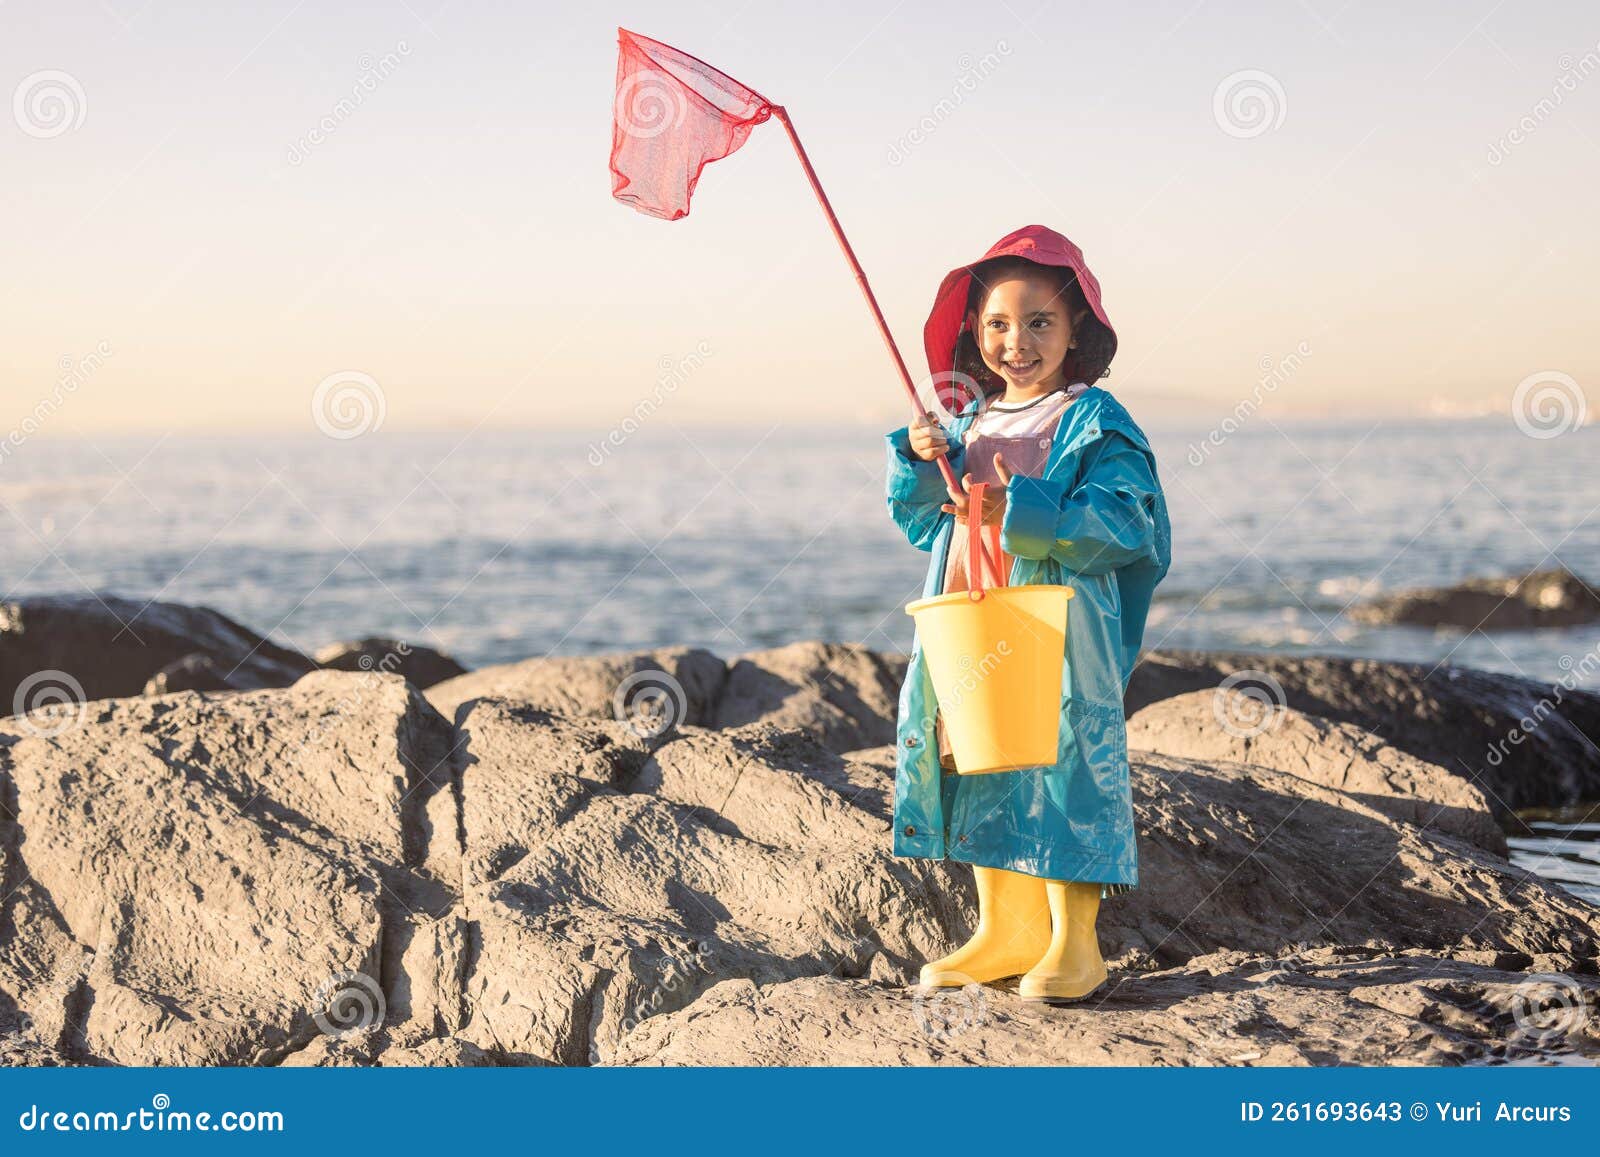 Child, Girl or Kid Fishing Net or Bucket by Beach Rock Pools